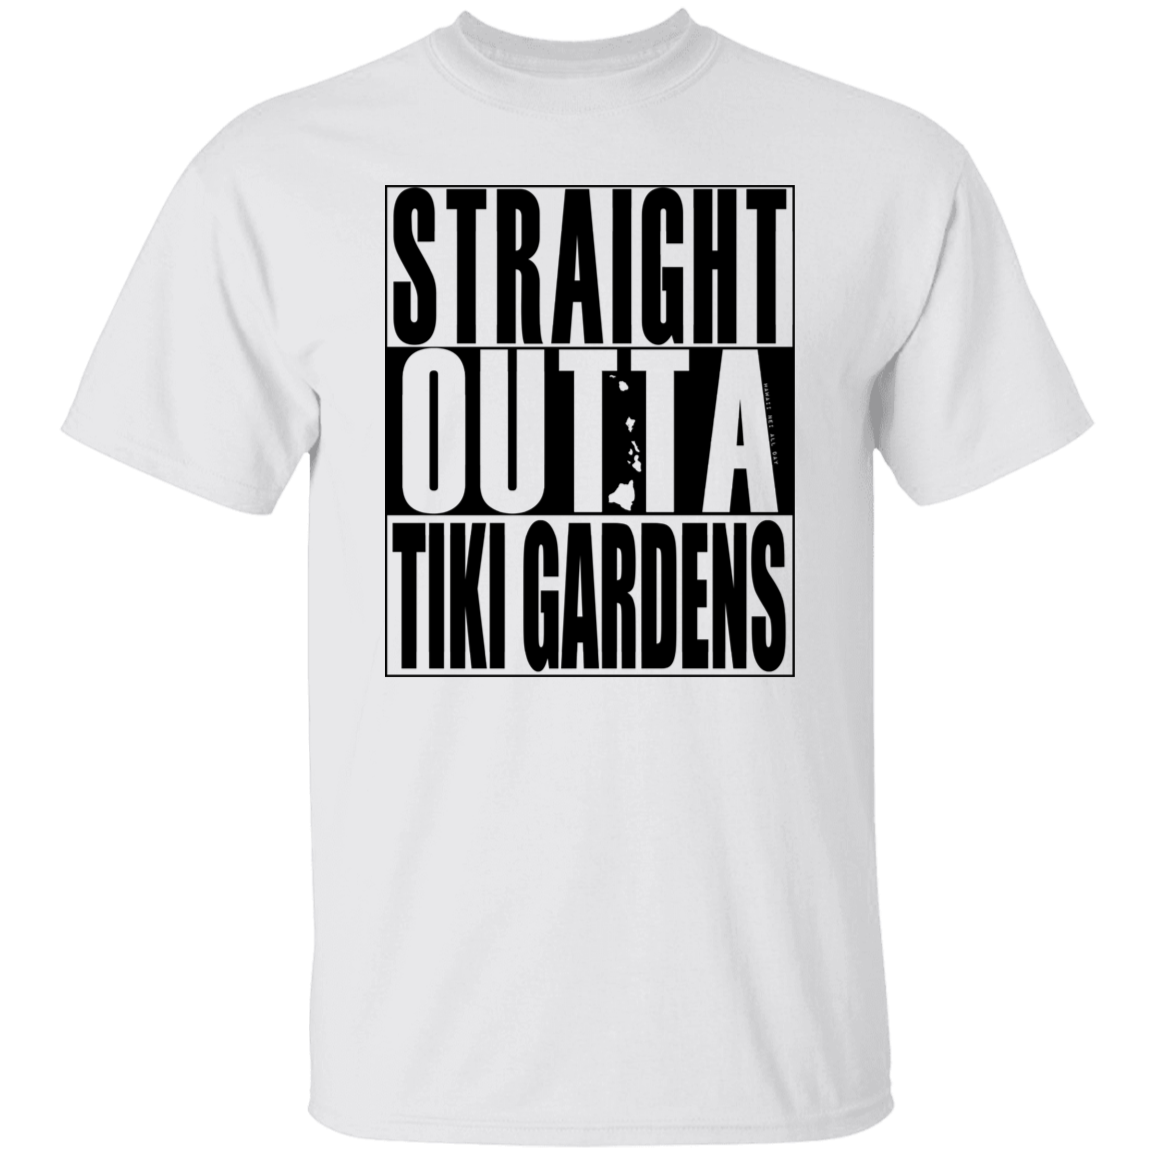 Straight Outta Tiki Gardens(black ink) T-Shirt